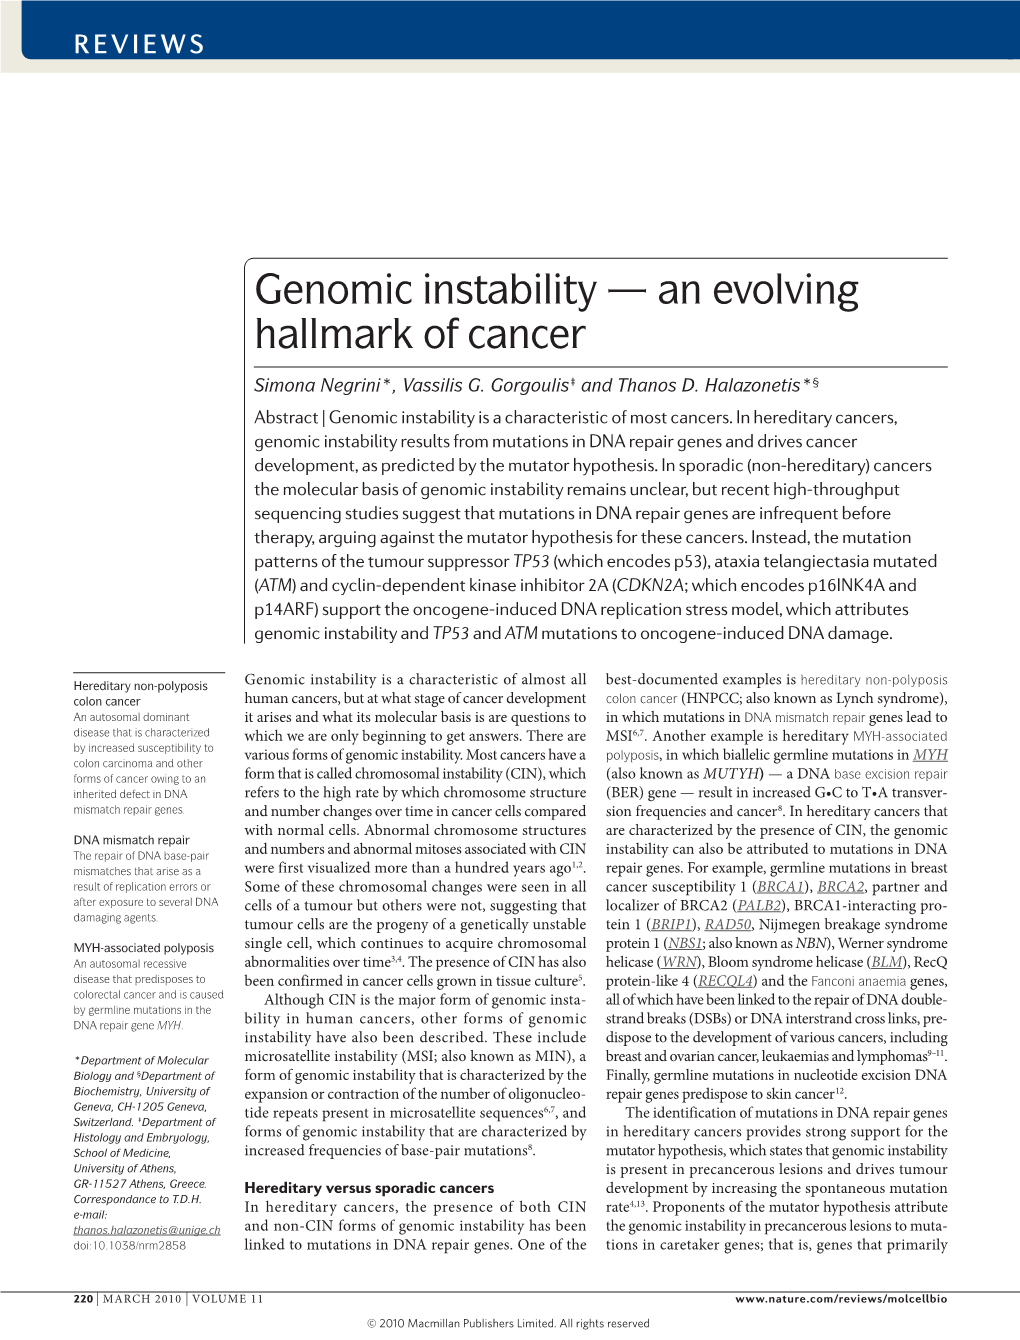 Genomic Instability — an Evolving Hallmark of Cancer